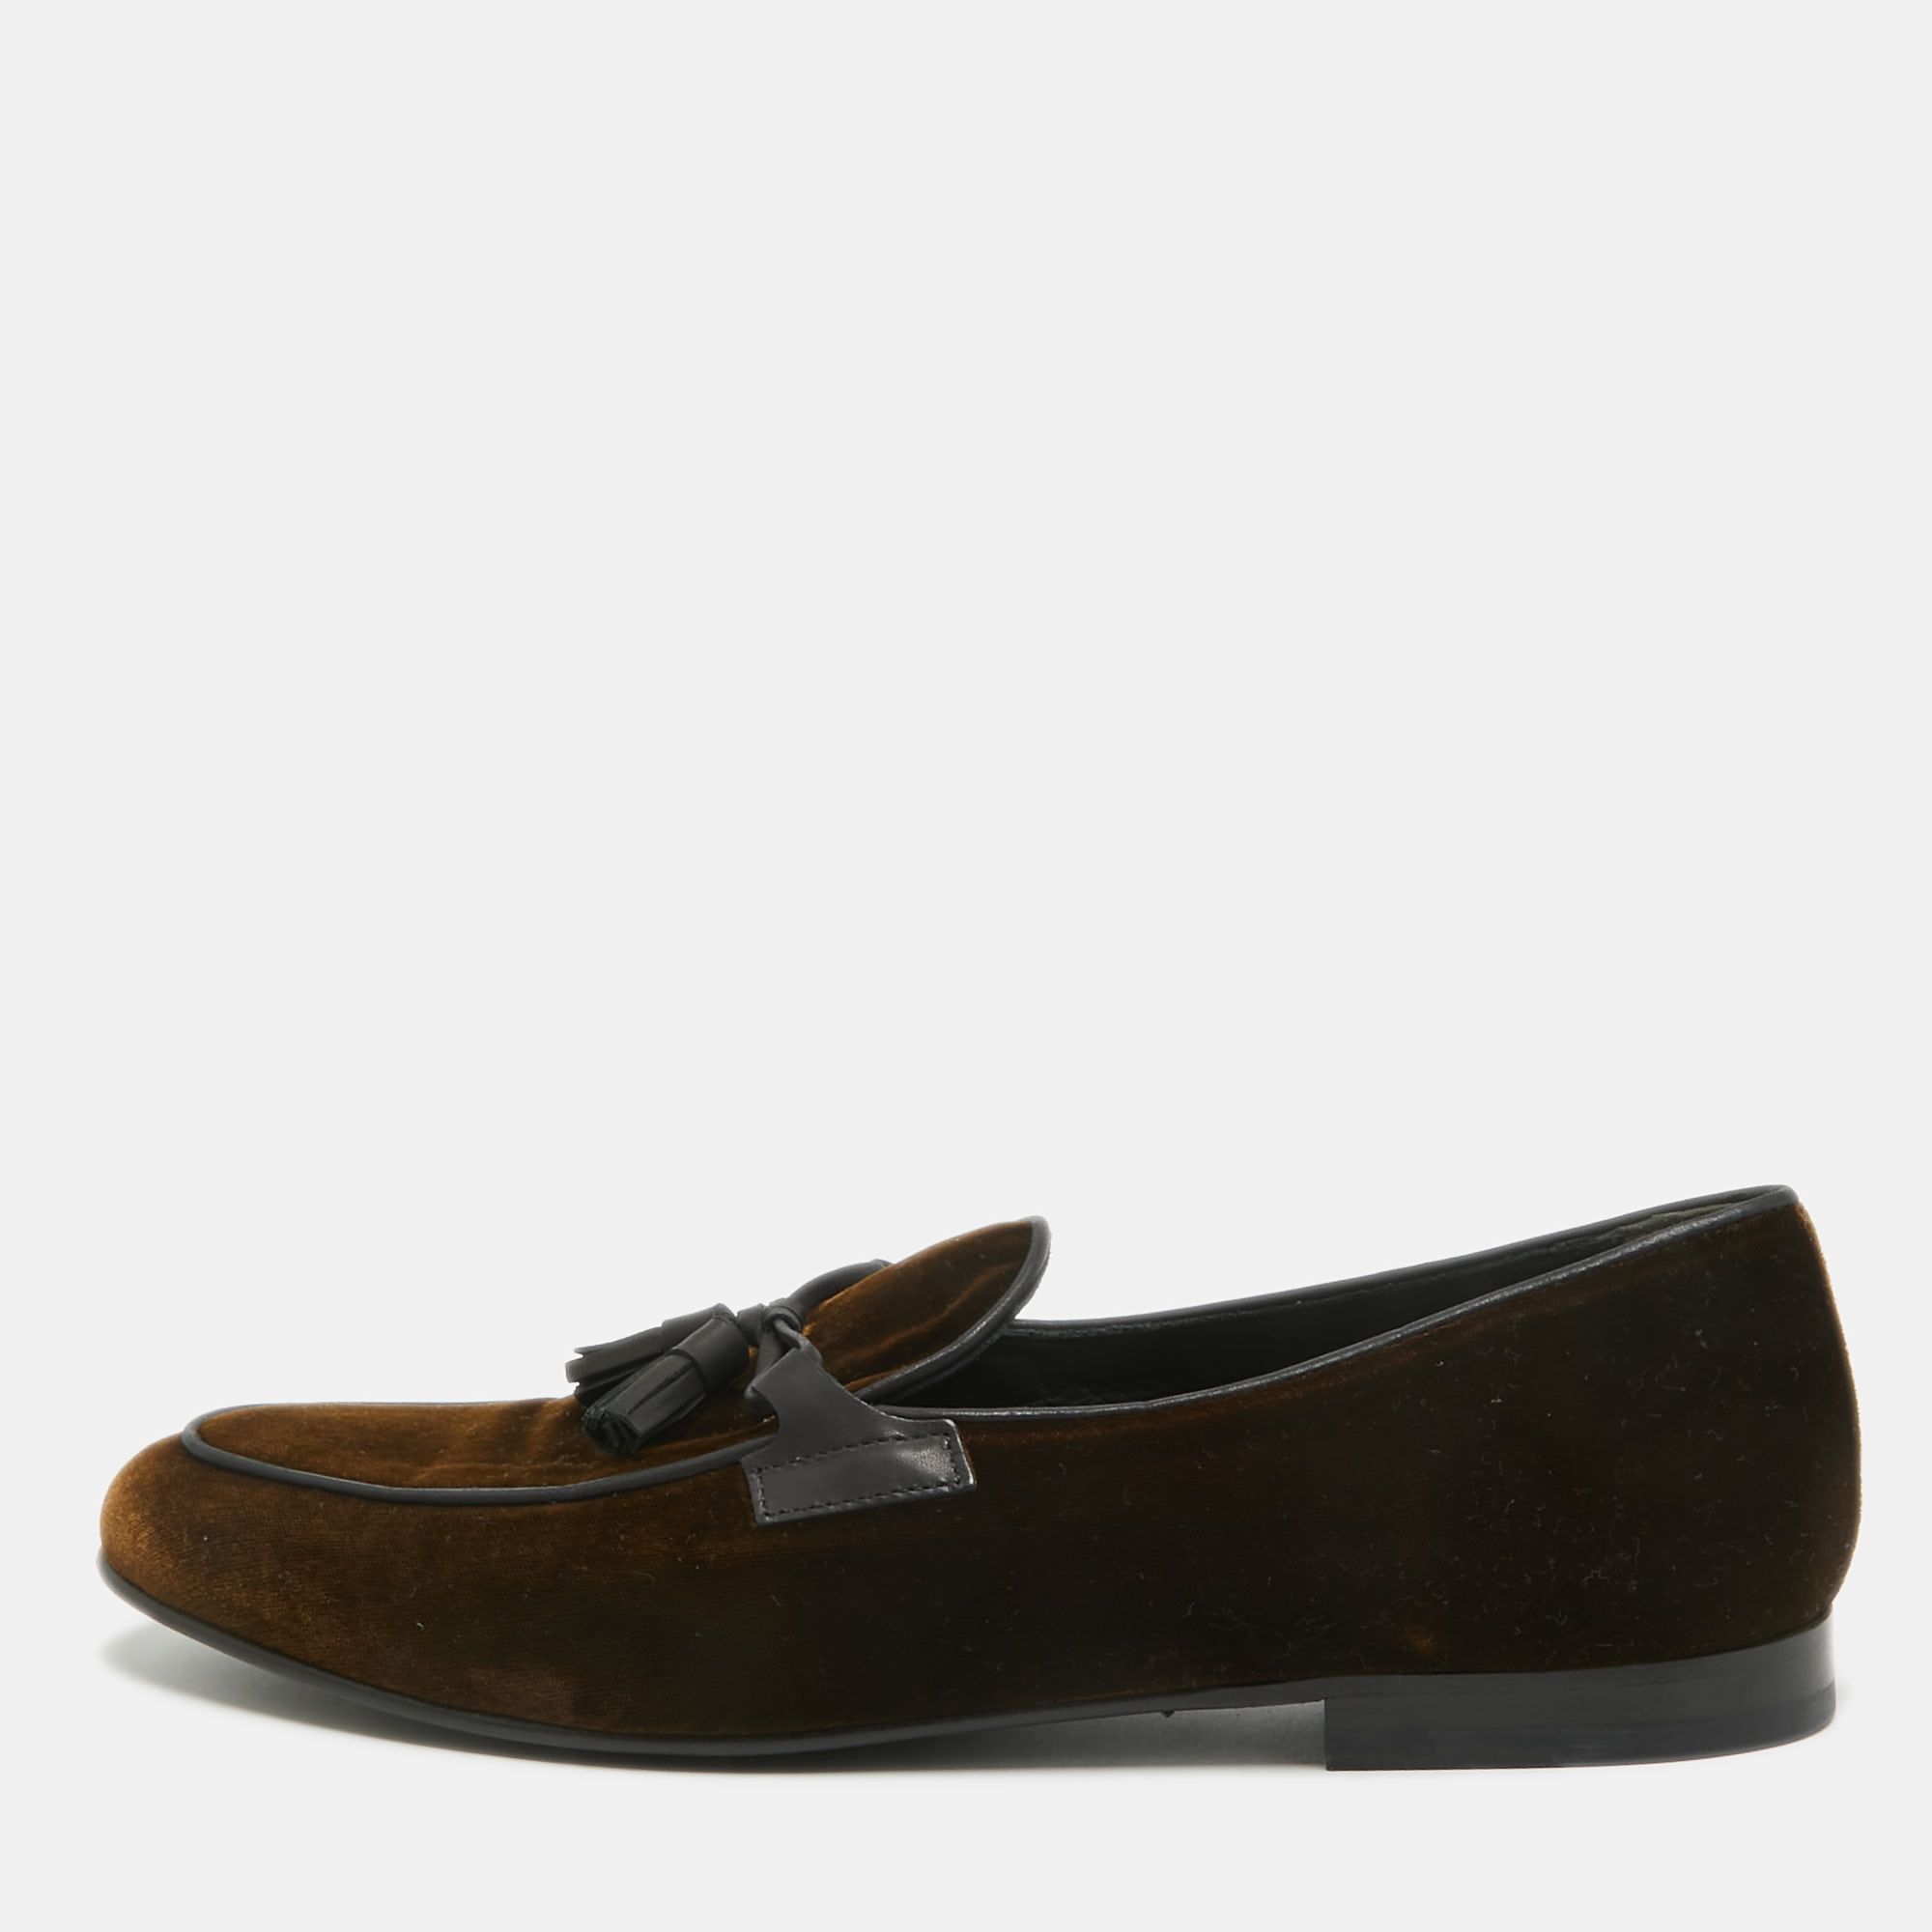 Tom ford brown/black velvet and leather tassel detail slip on loafers size 42.5